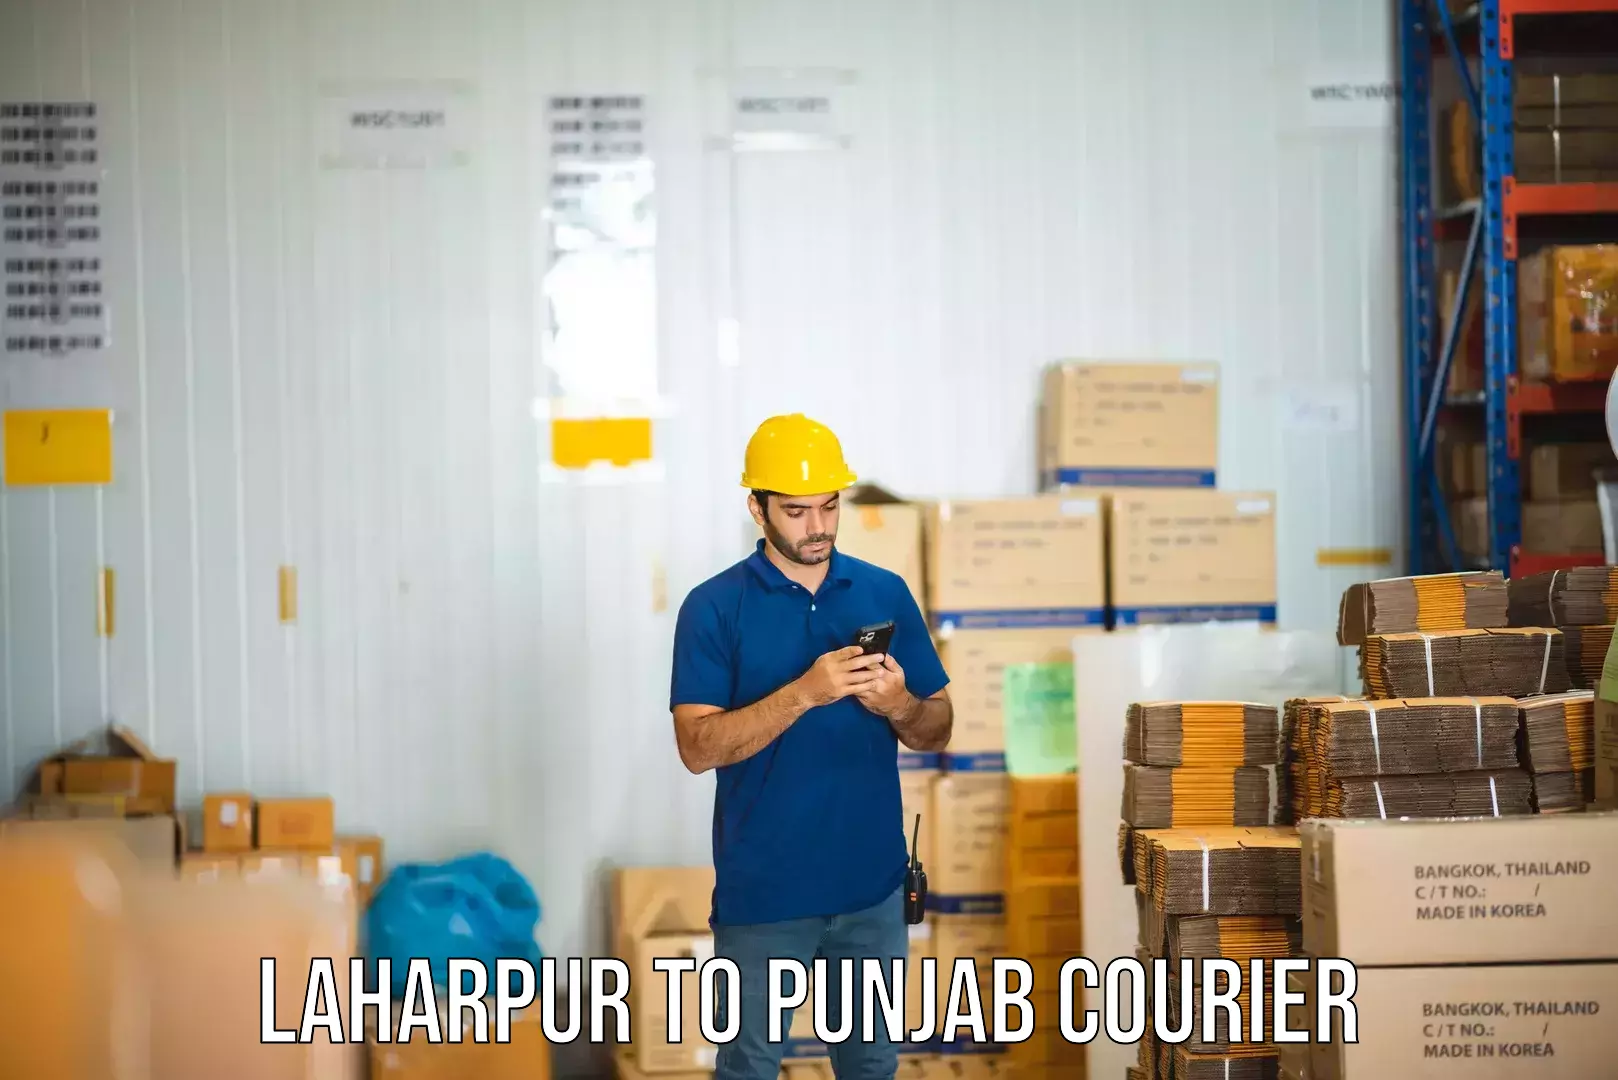 Budget-friendly shipping Laharpur to Punjab